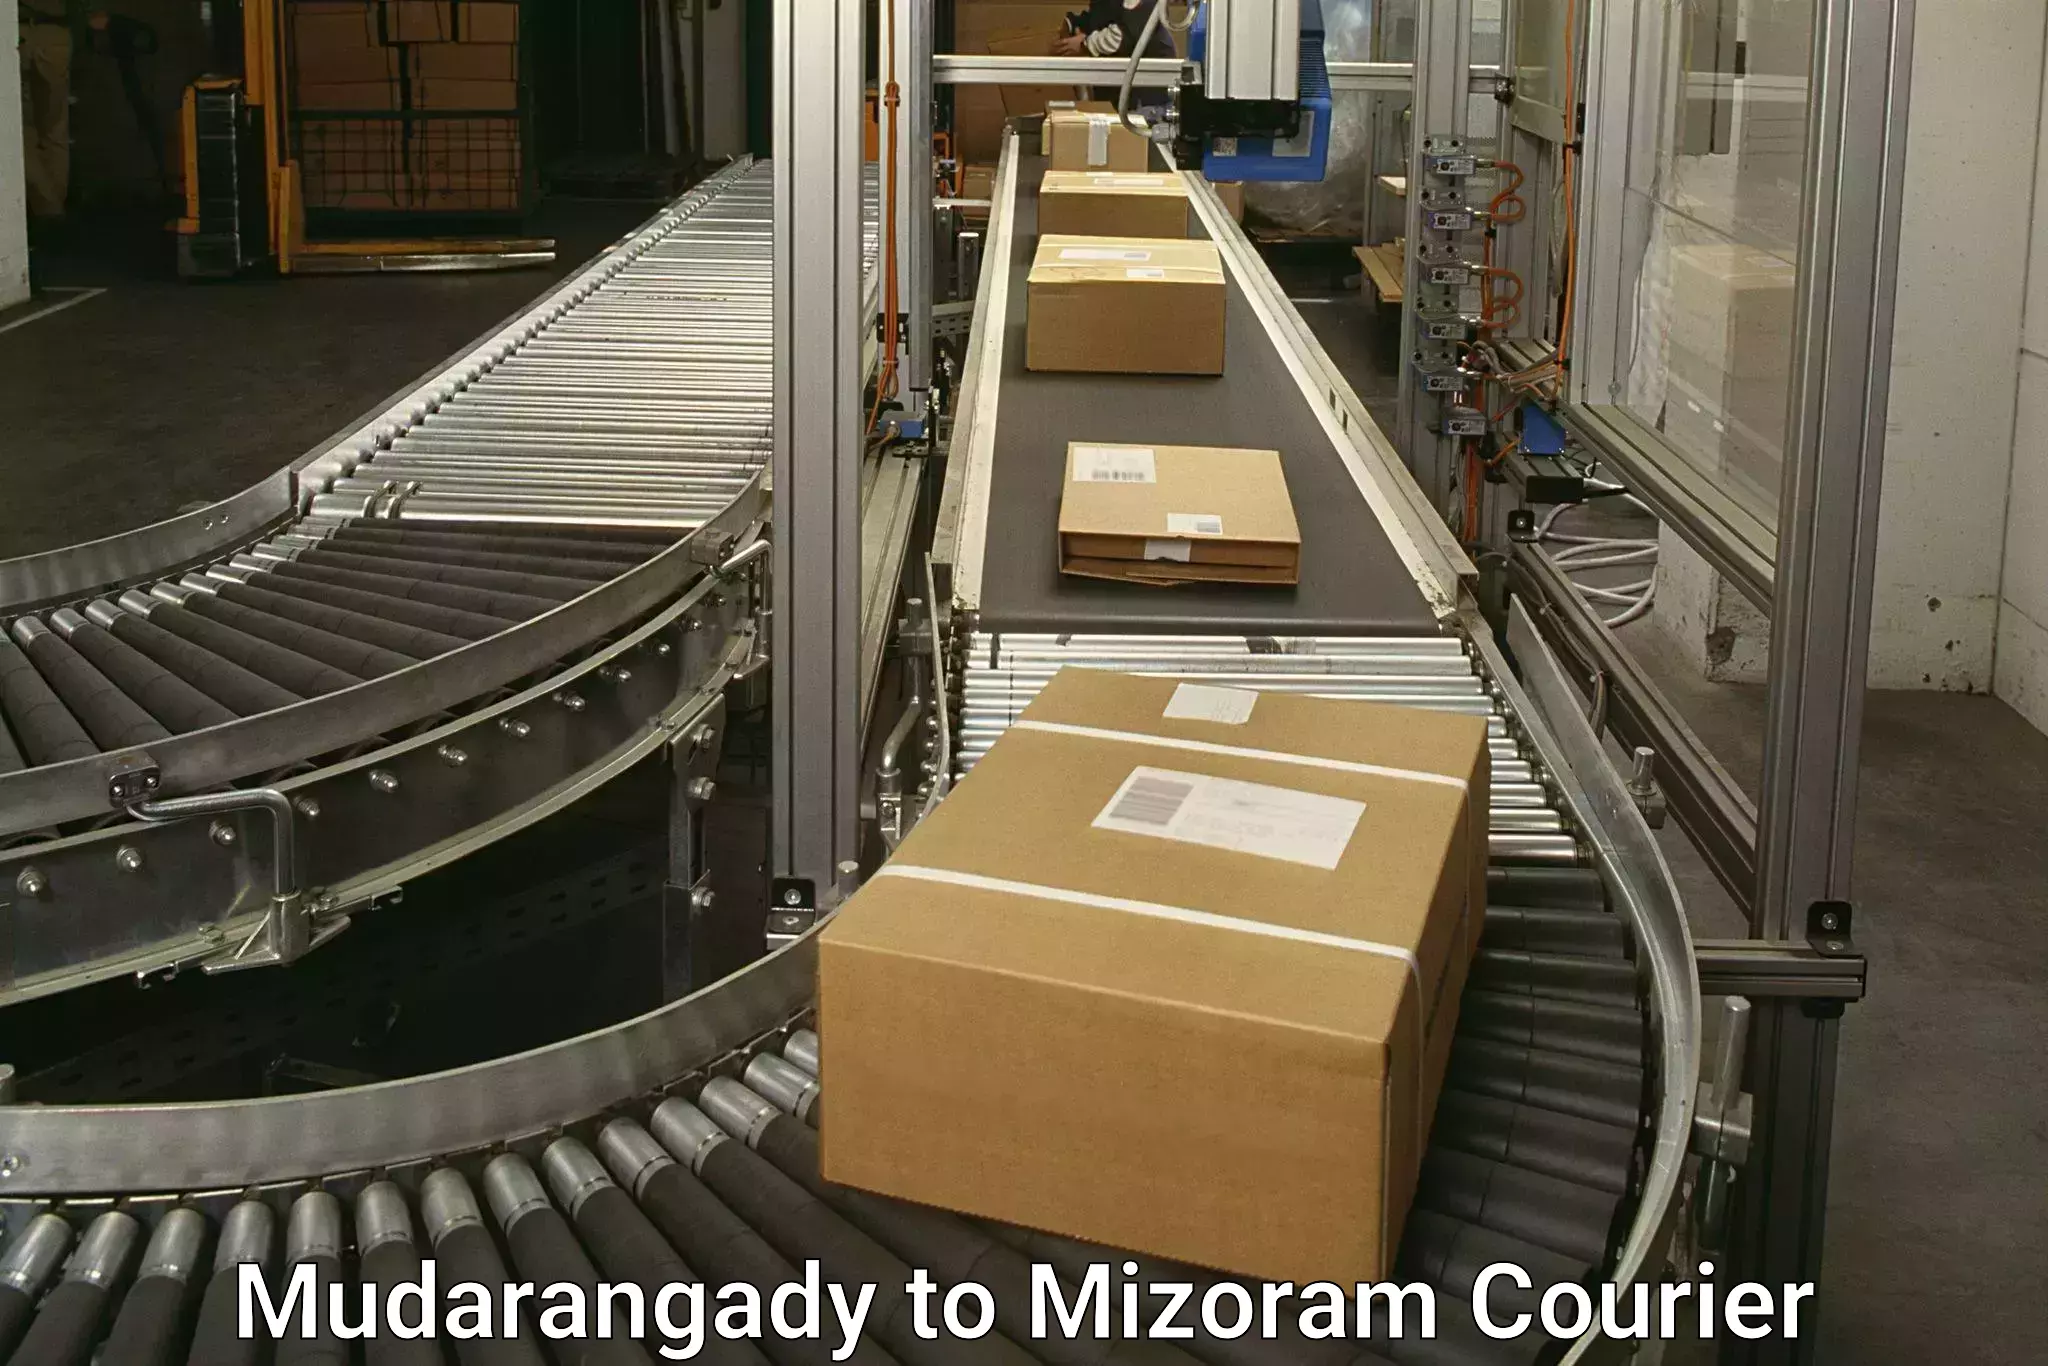 24-hour courier service Mudarangady to Mizoram